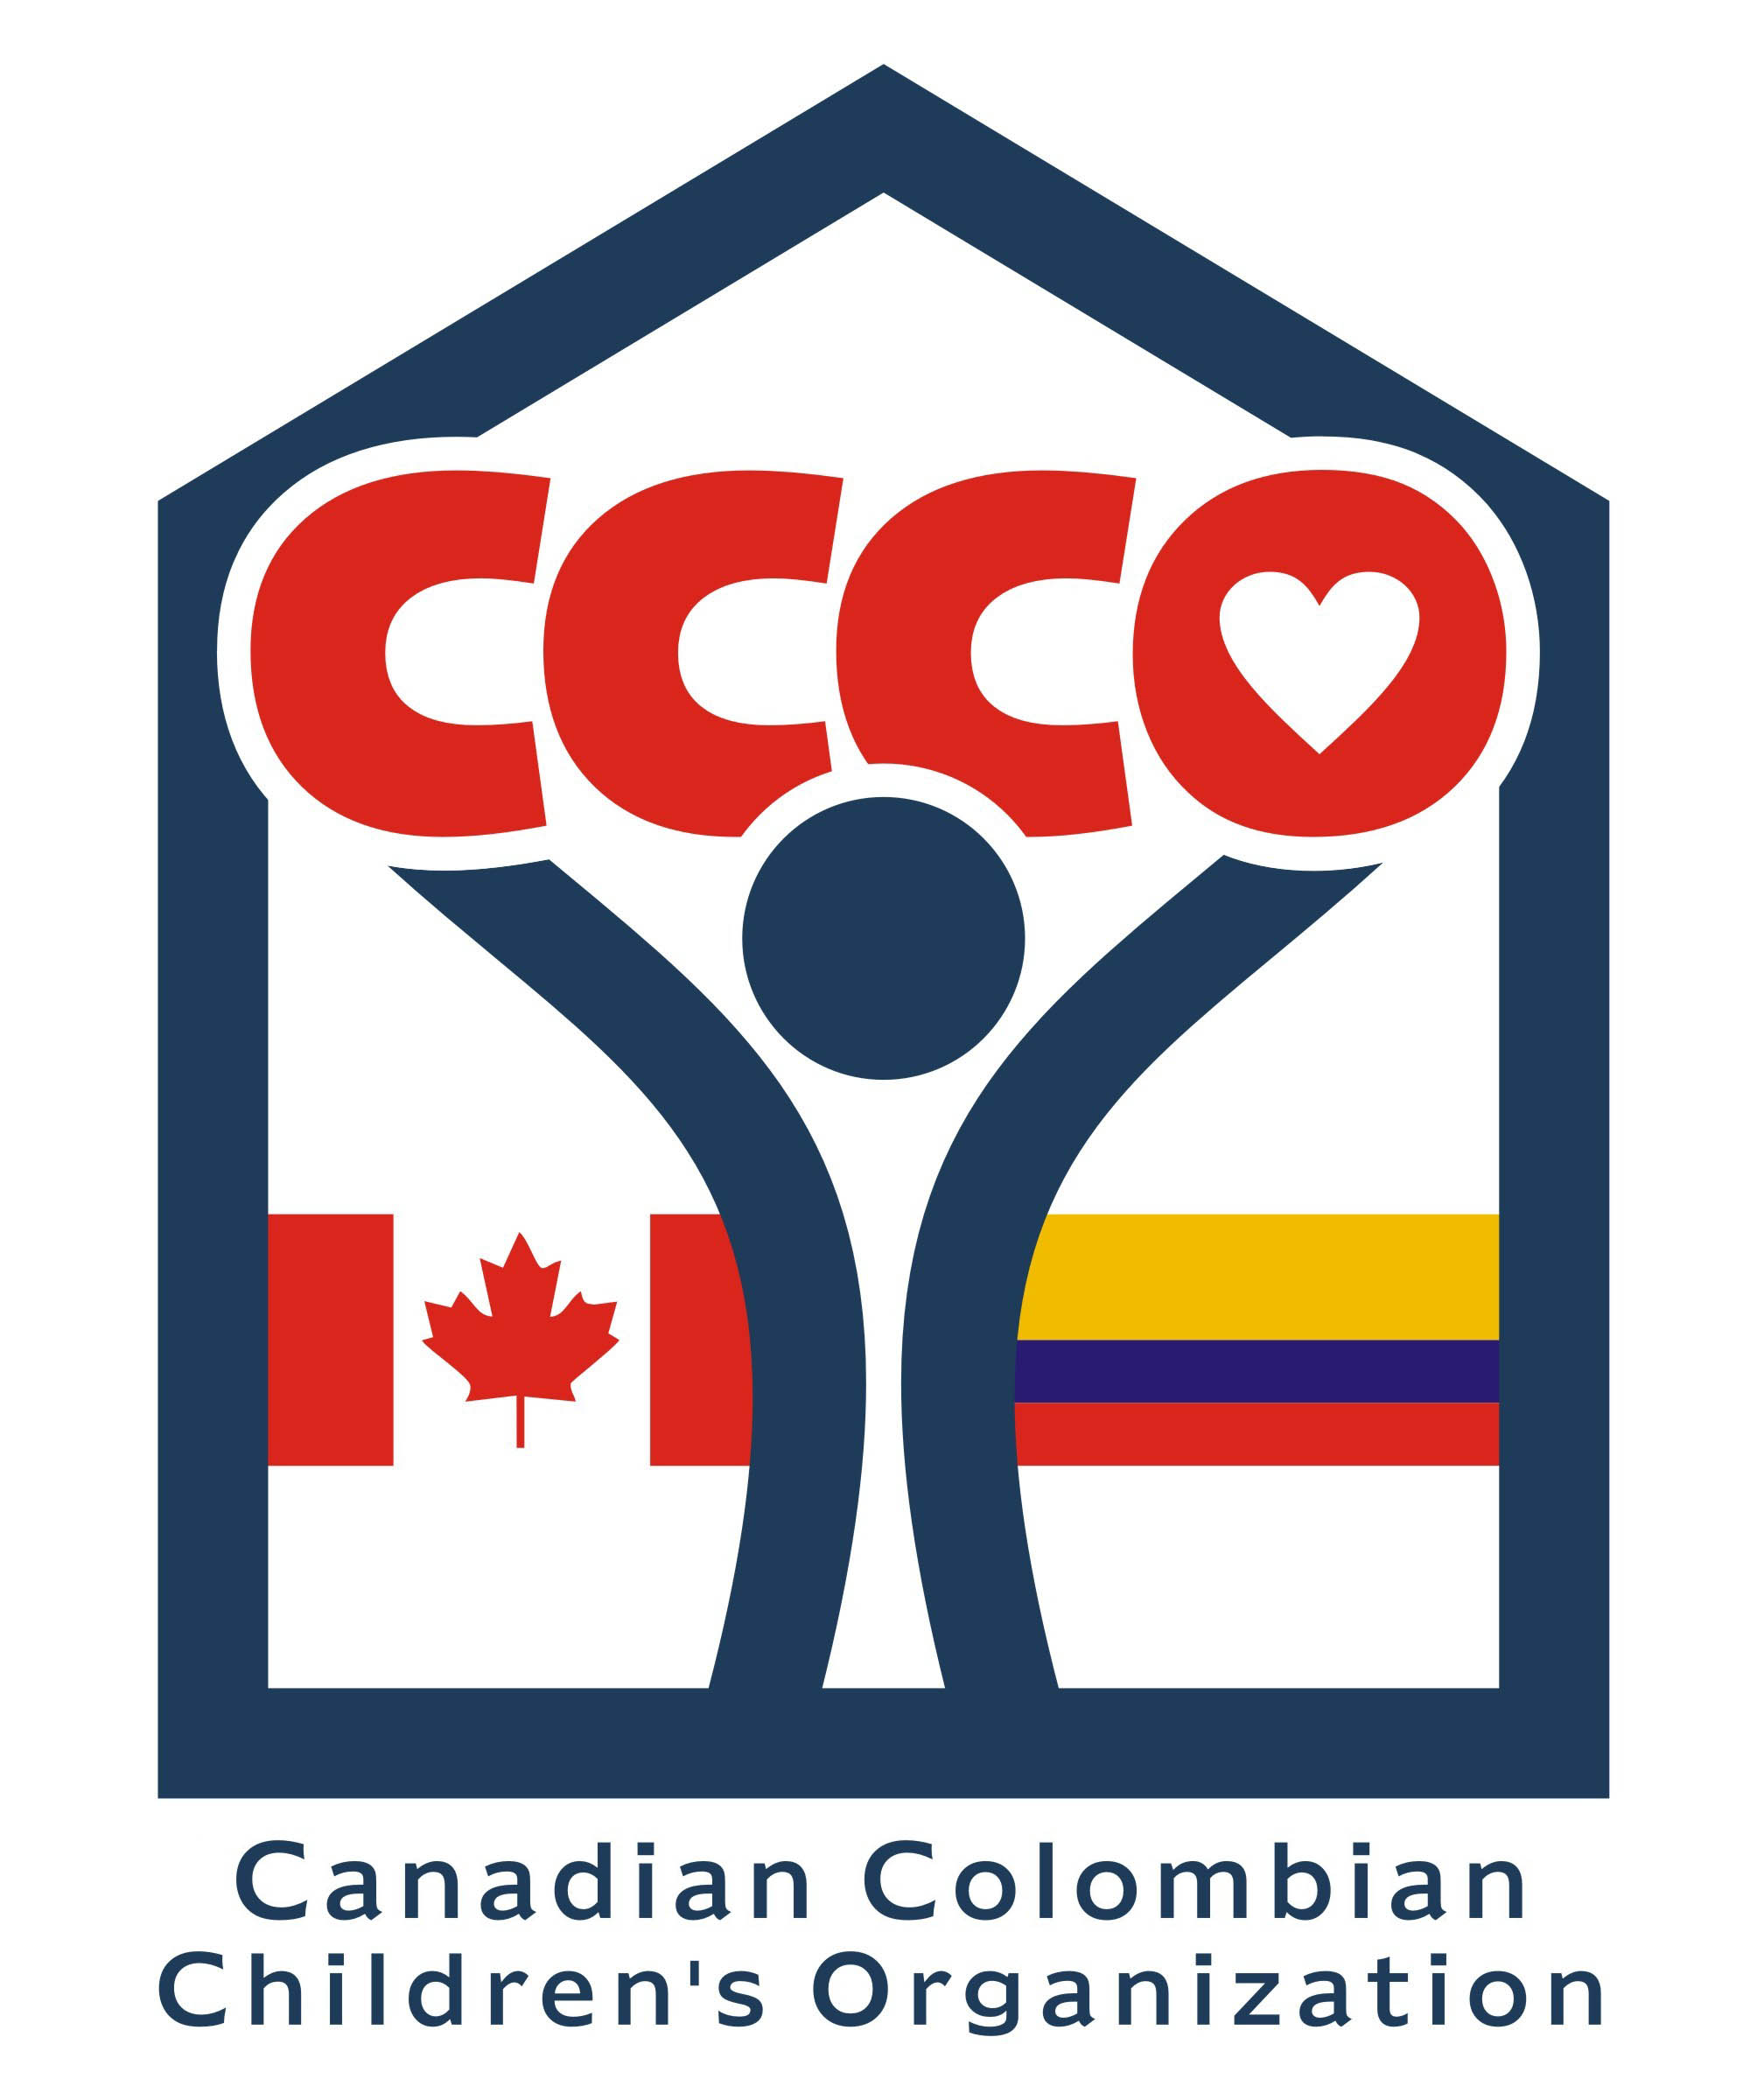 The Canadian Colombian Children's Organization logo